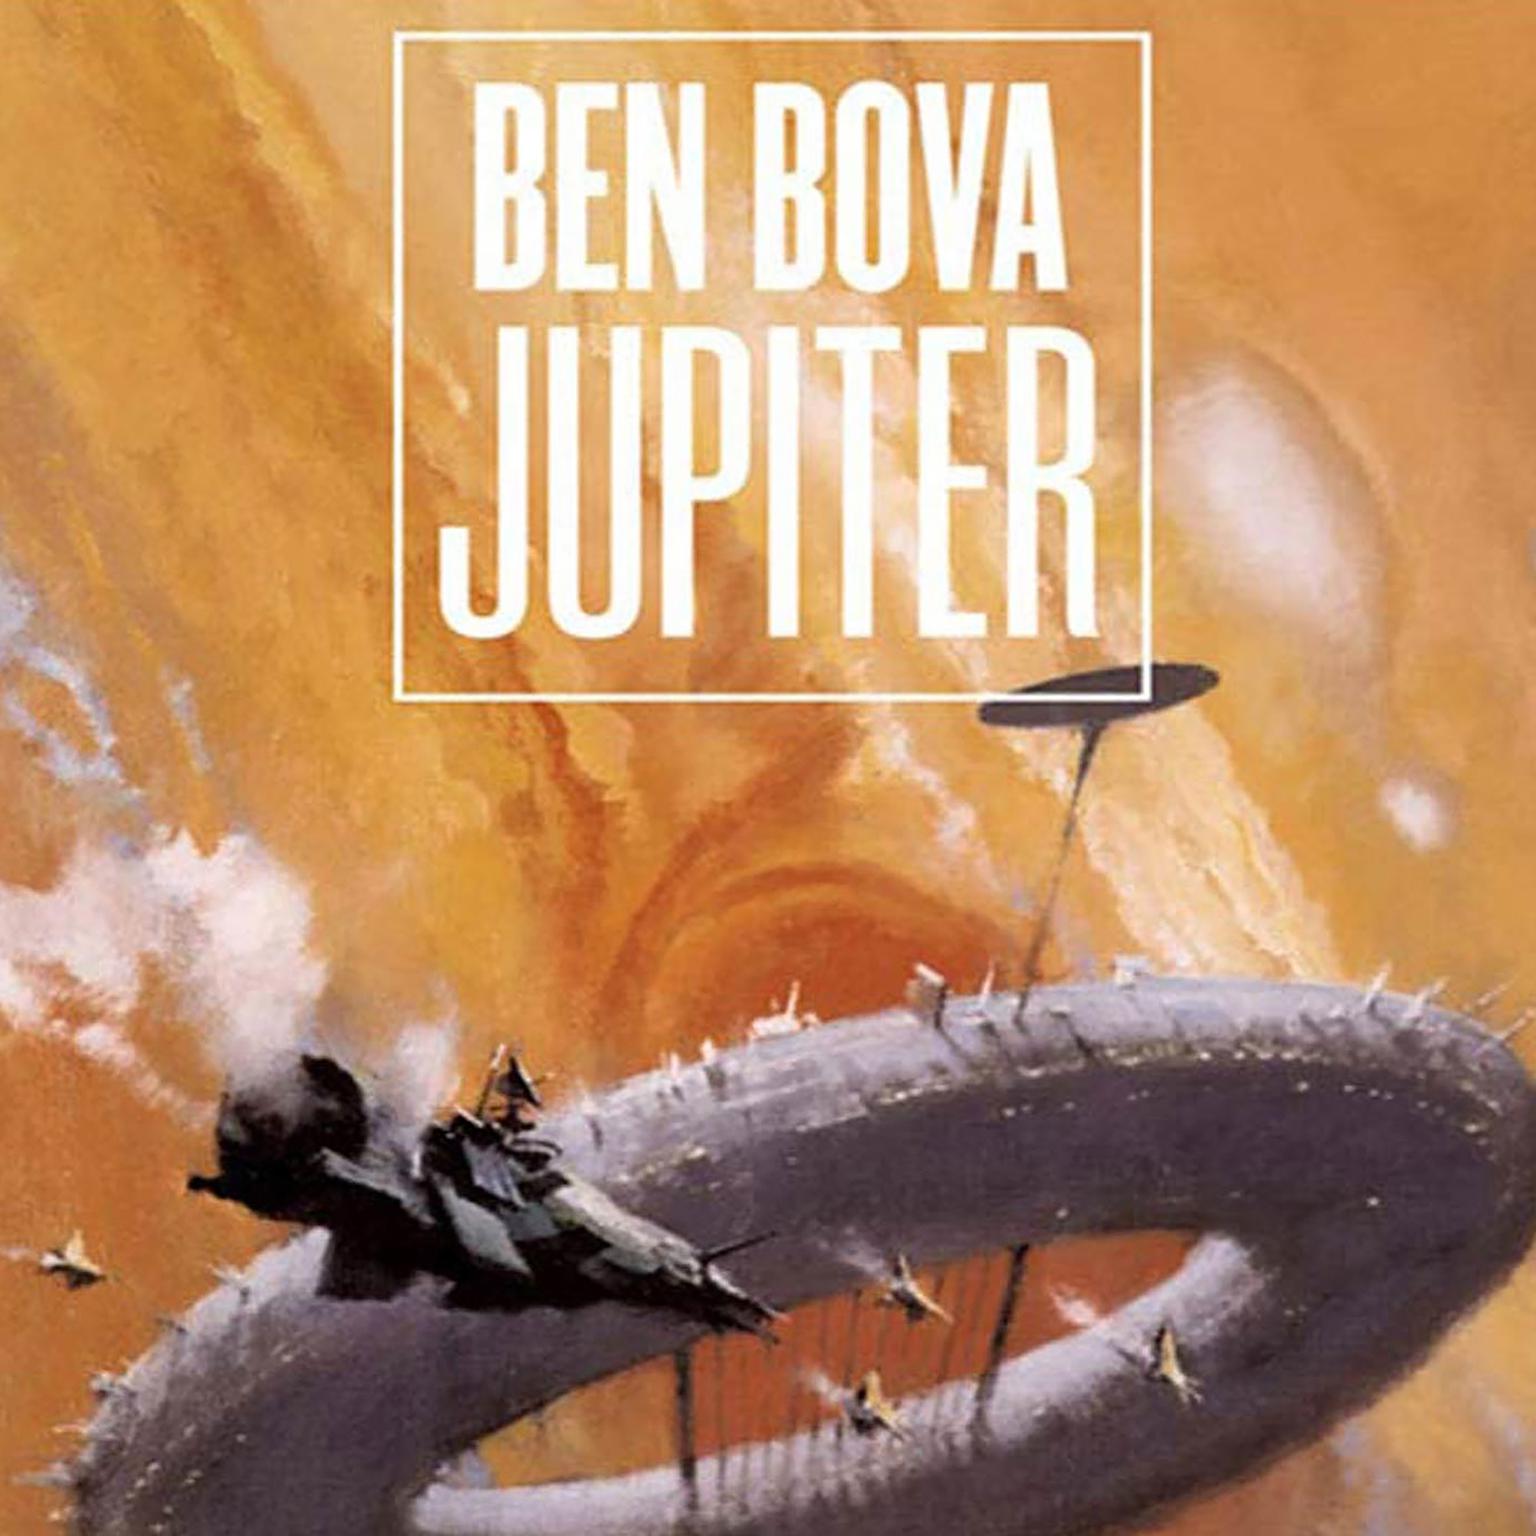 Jupiter: A Novel Audiobook, by Ben Bova